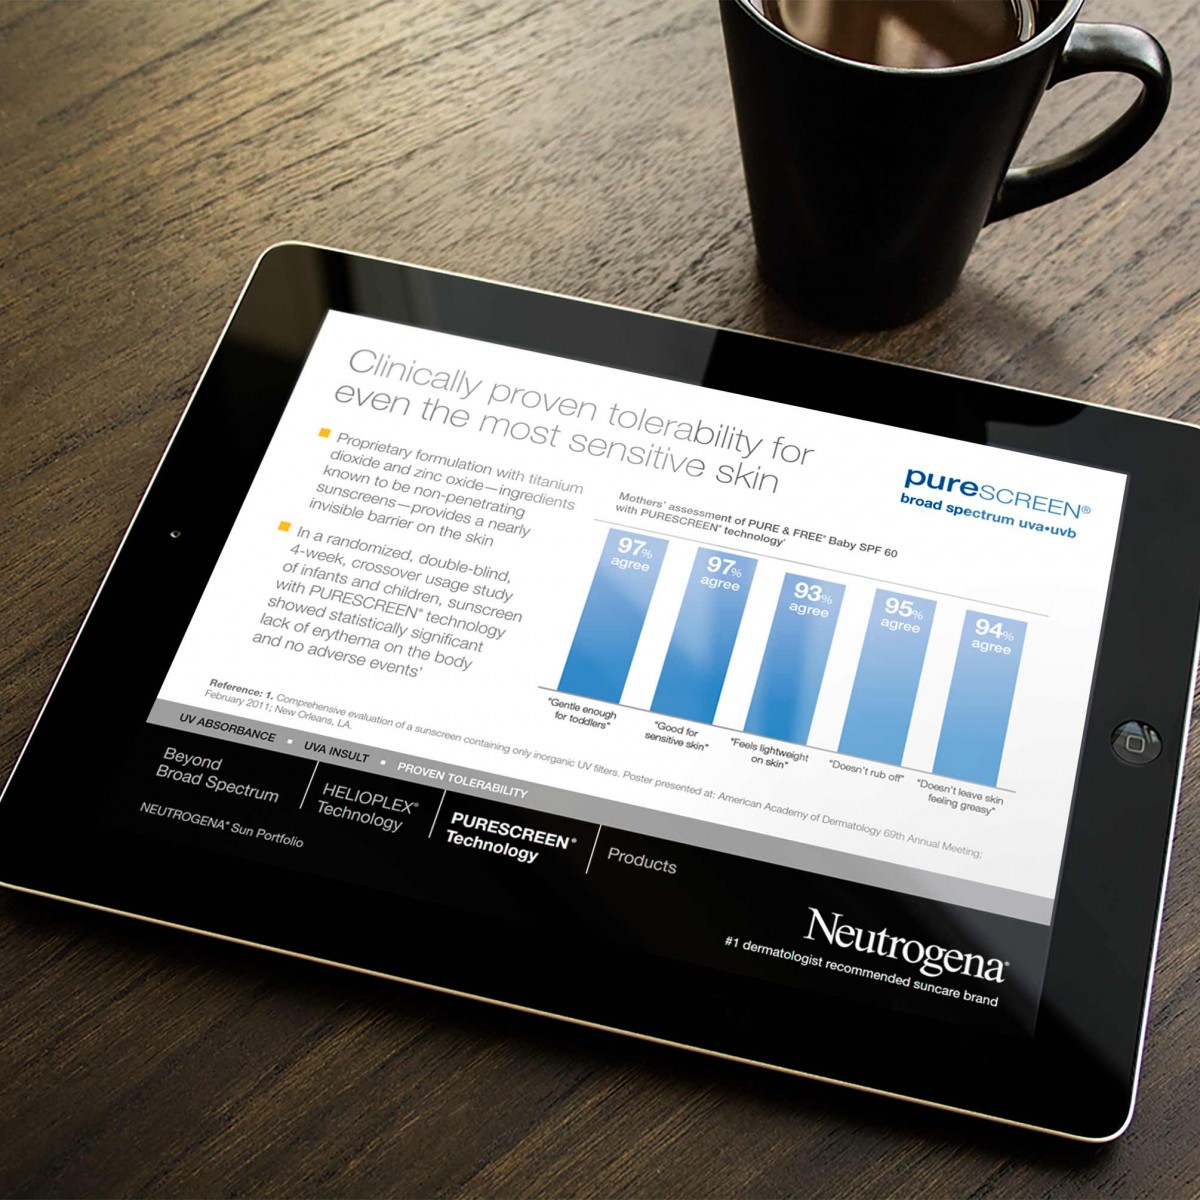 Neutrogena Interactive iPad Salesforce Sales Aid